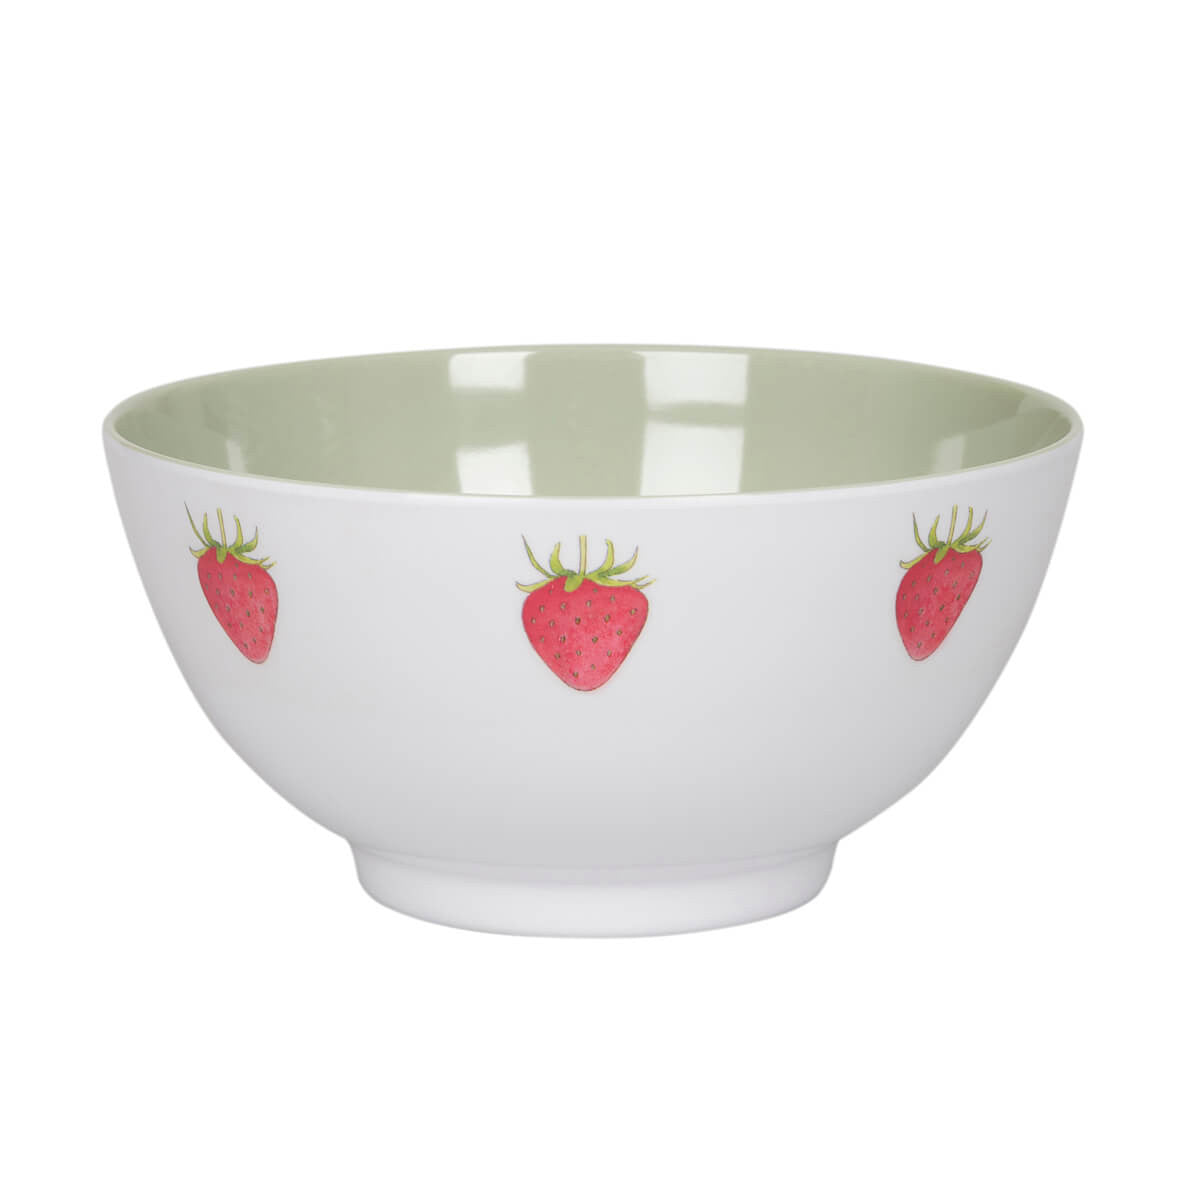 Strawberries Melamine Bowl by Sophie Allport.